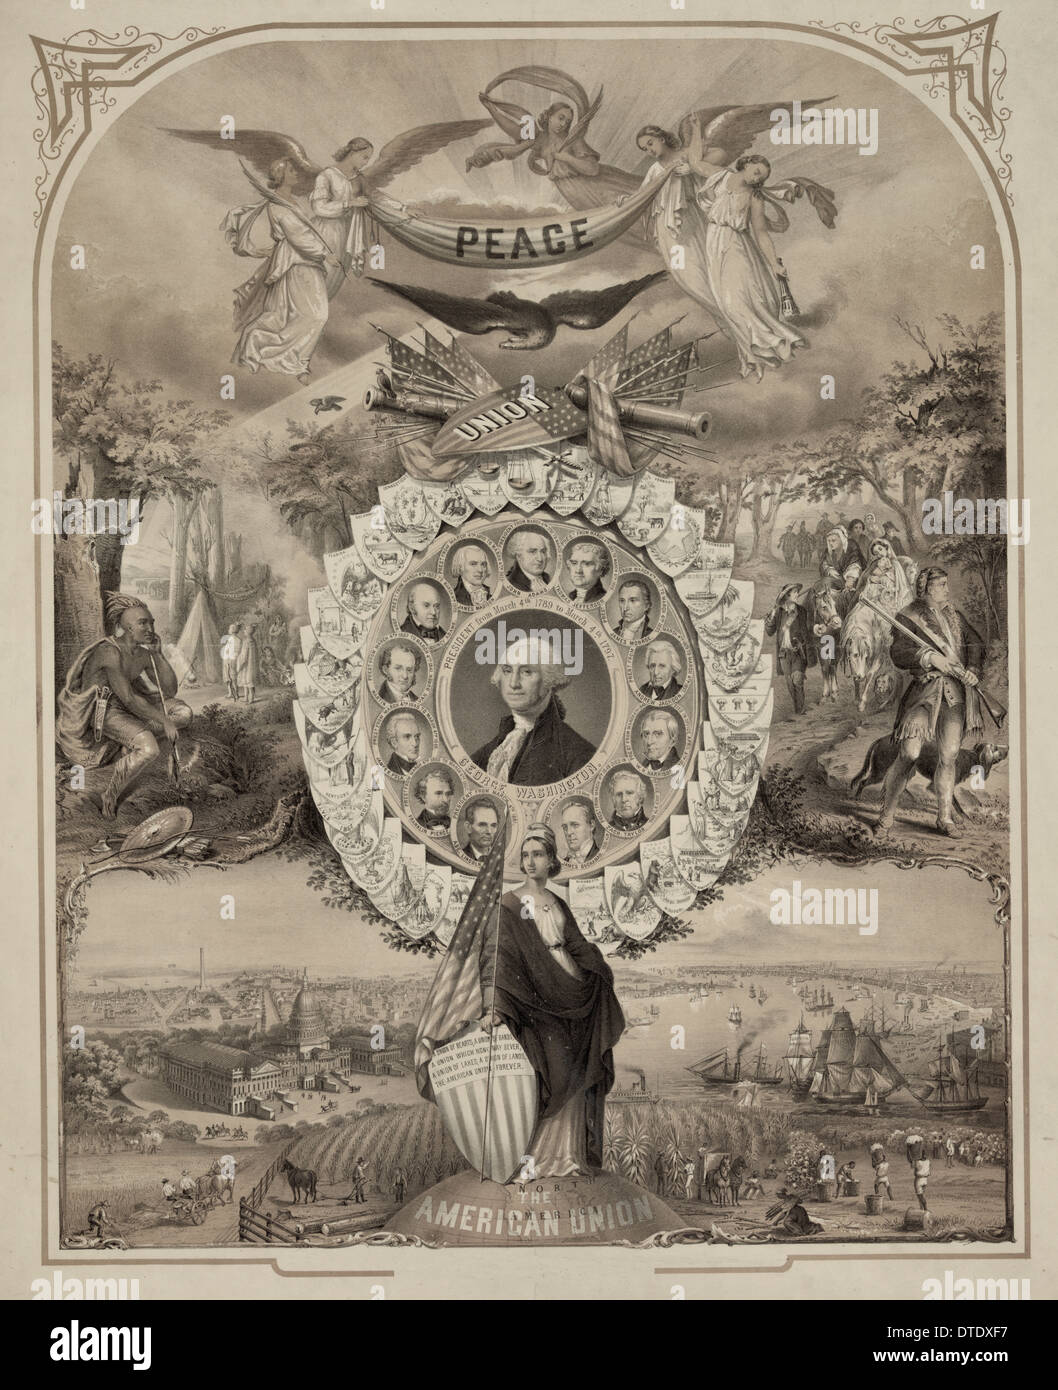 The American union - poster featuring Presidents George Washington through James Buchanan, 1861 Stock Photo